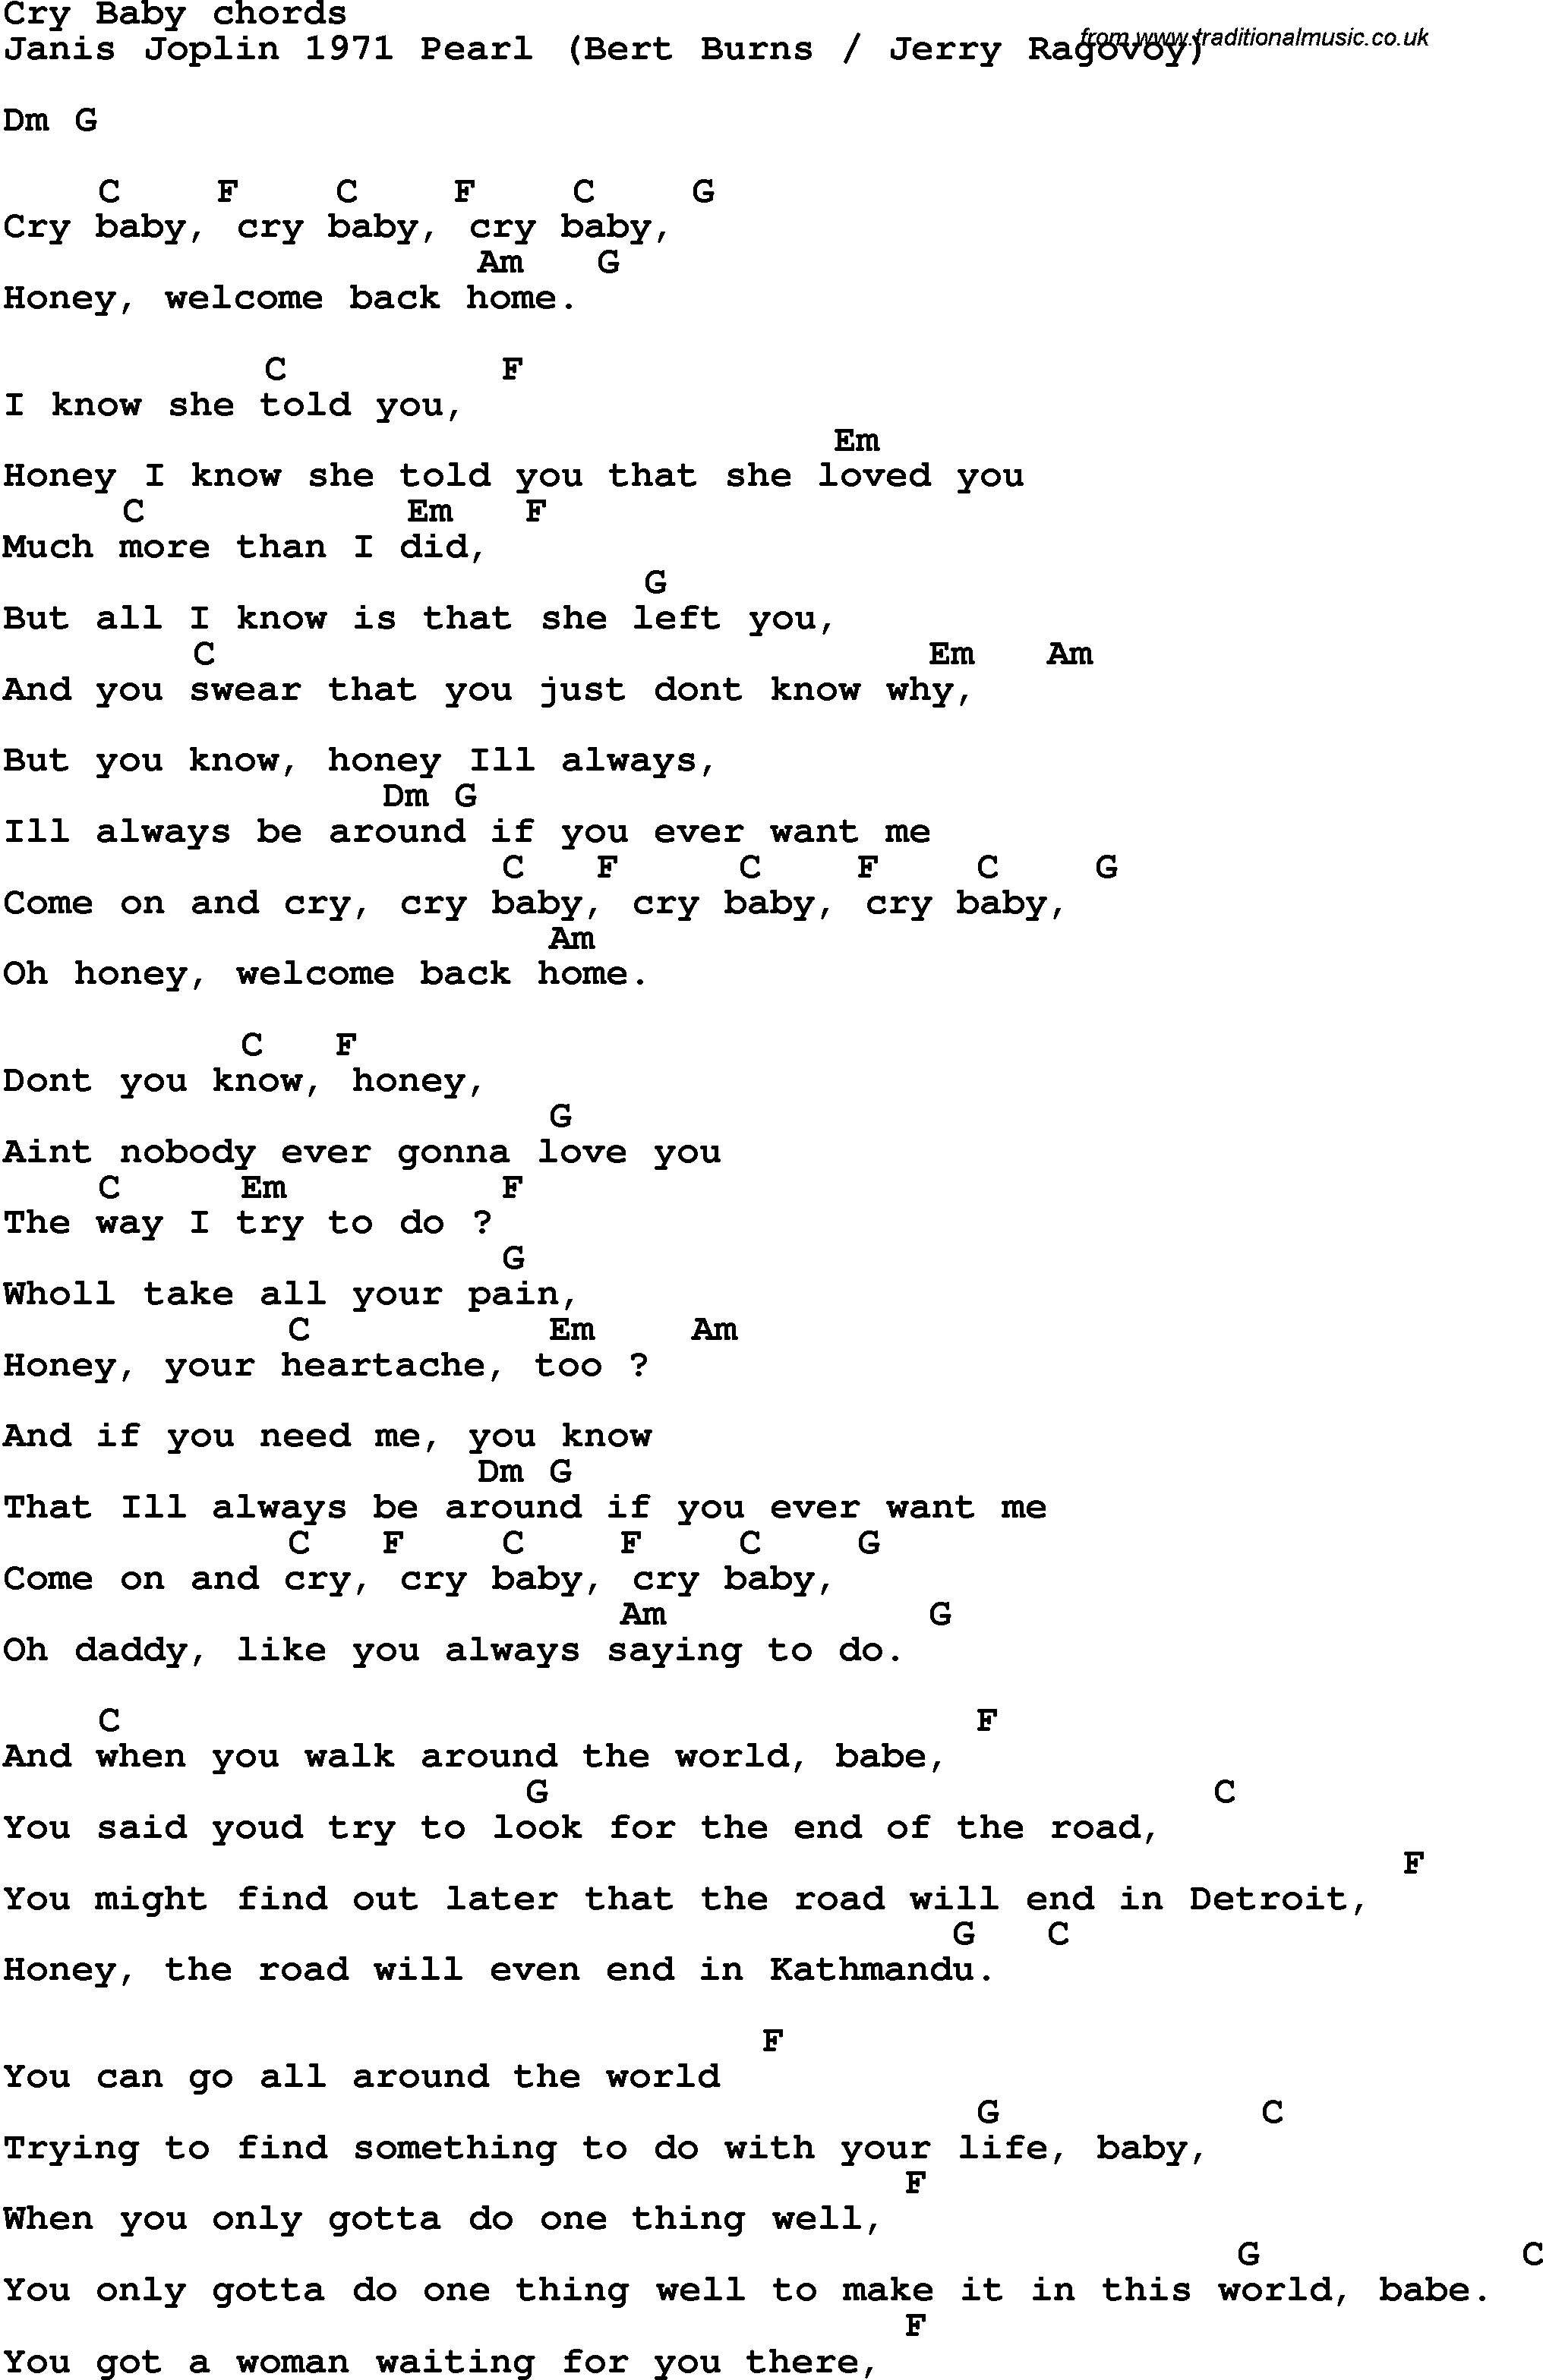 Lyrics to mercedes benz song by janis joplin #2